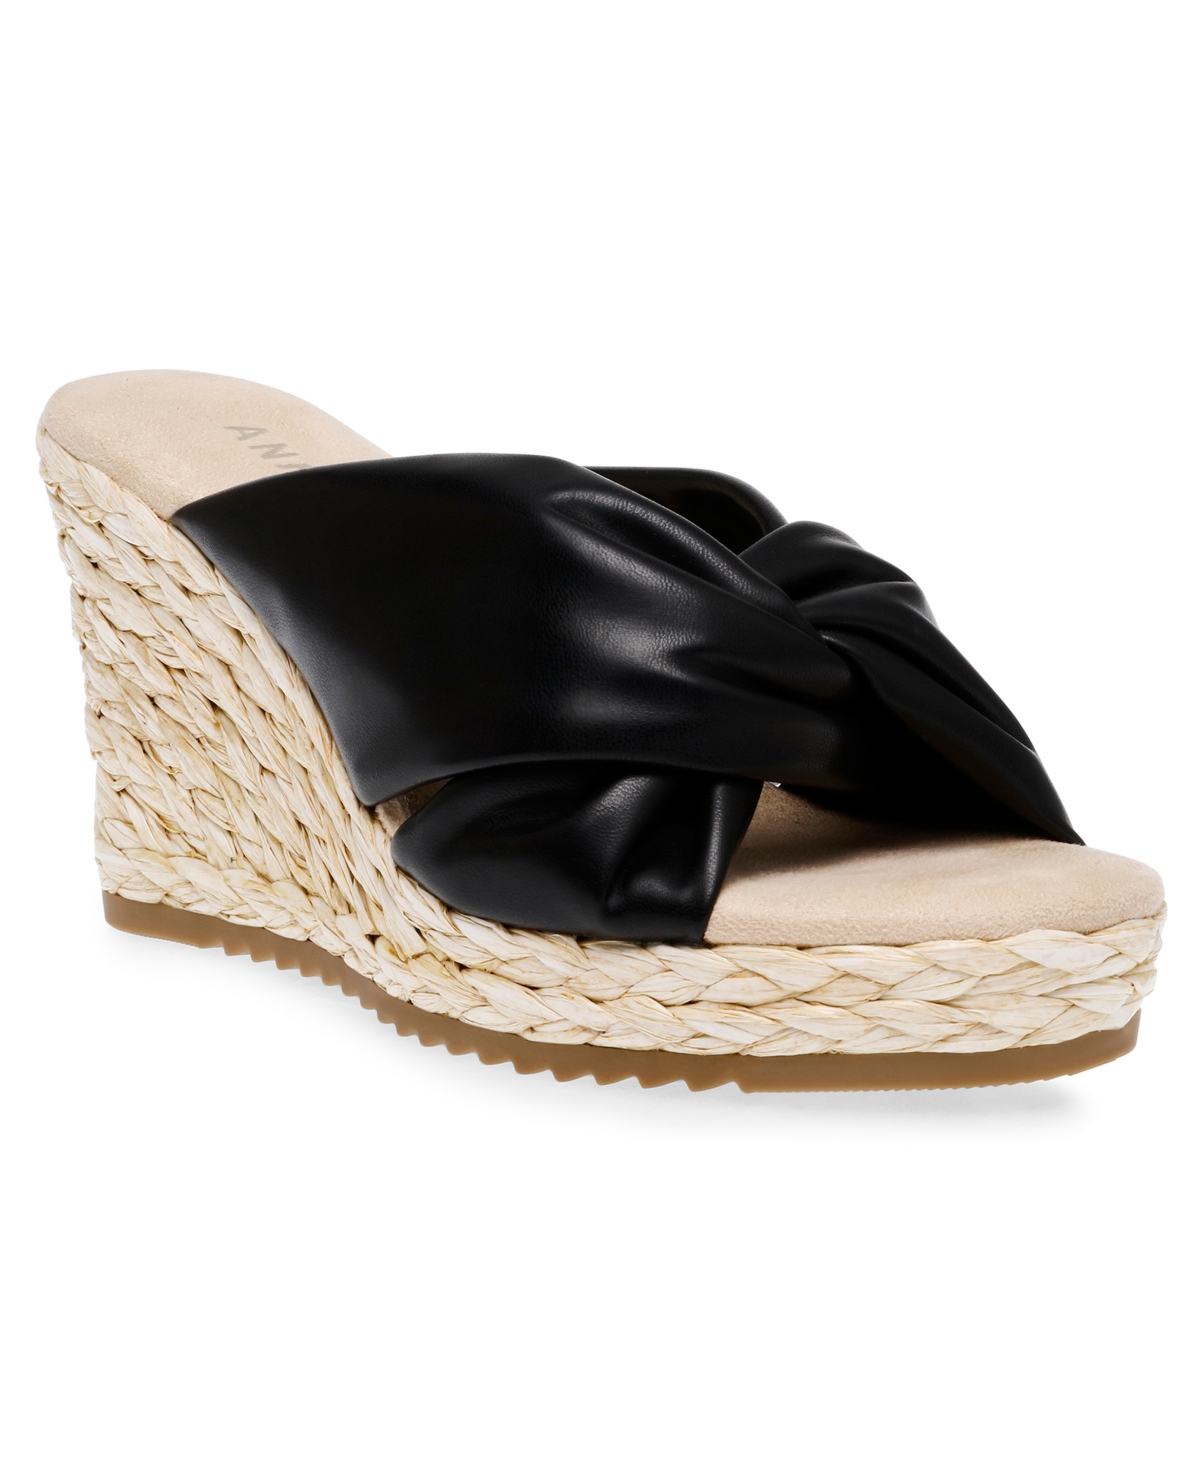 Women's Weslie Slide On Espadrille Wedge Sandals - White